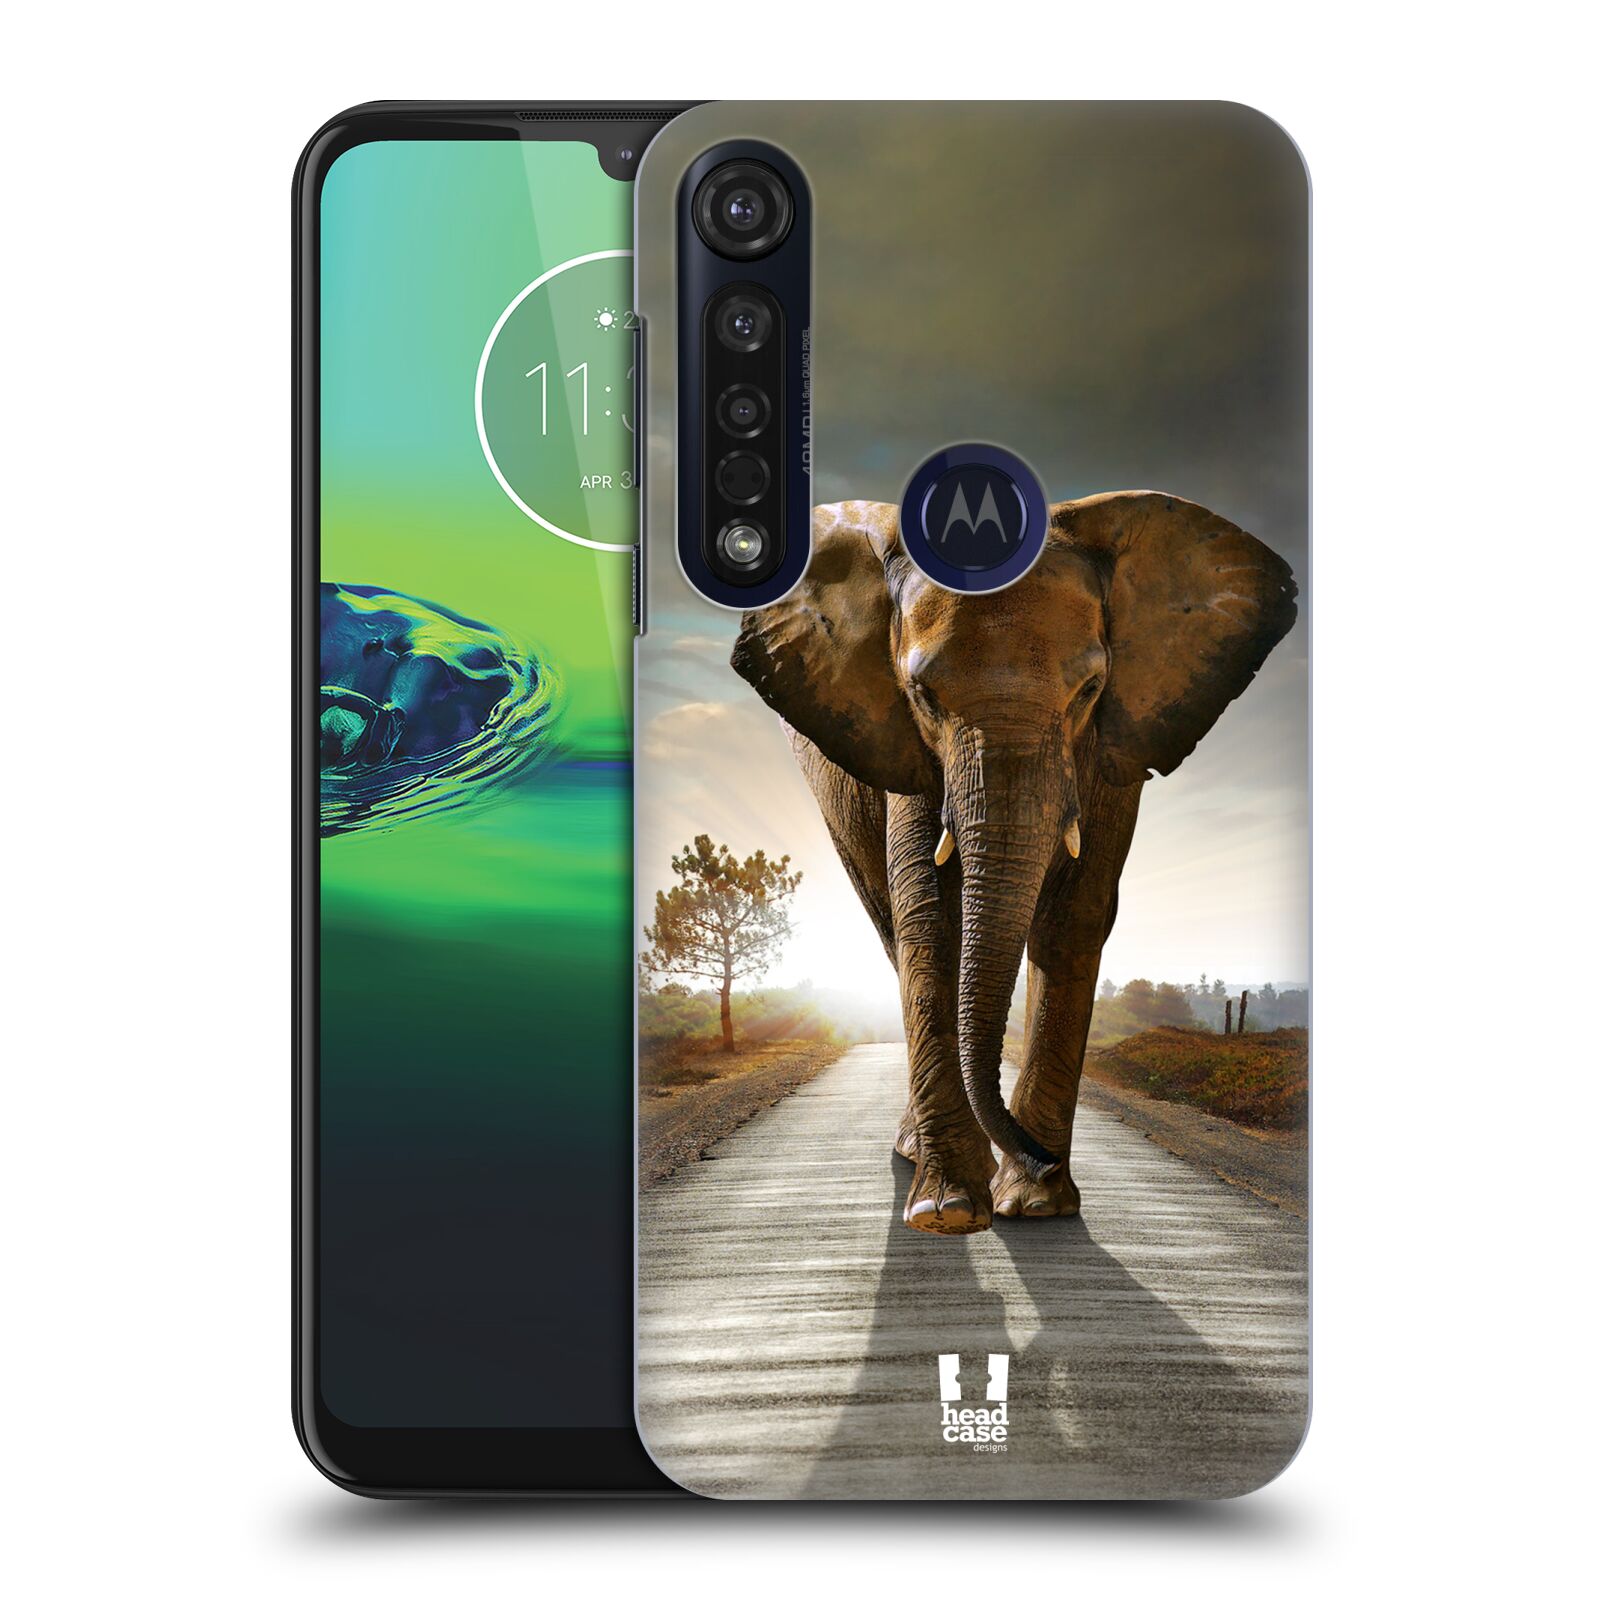 Pouzdro na mobil Motorola Moto G8 PLUS - HEAD CASE - vzor Divočina, Divoký život a zvířata foto AFRIKA KRÁČEJÍCI SLON